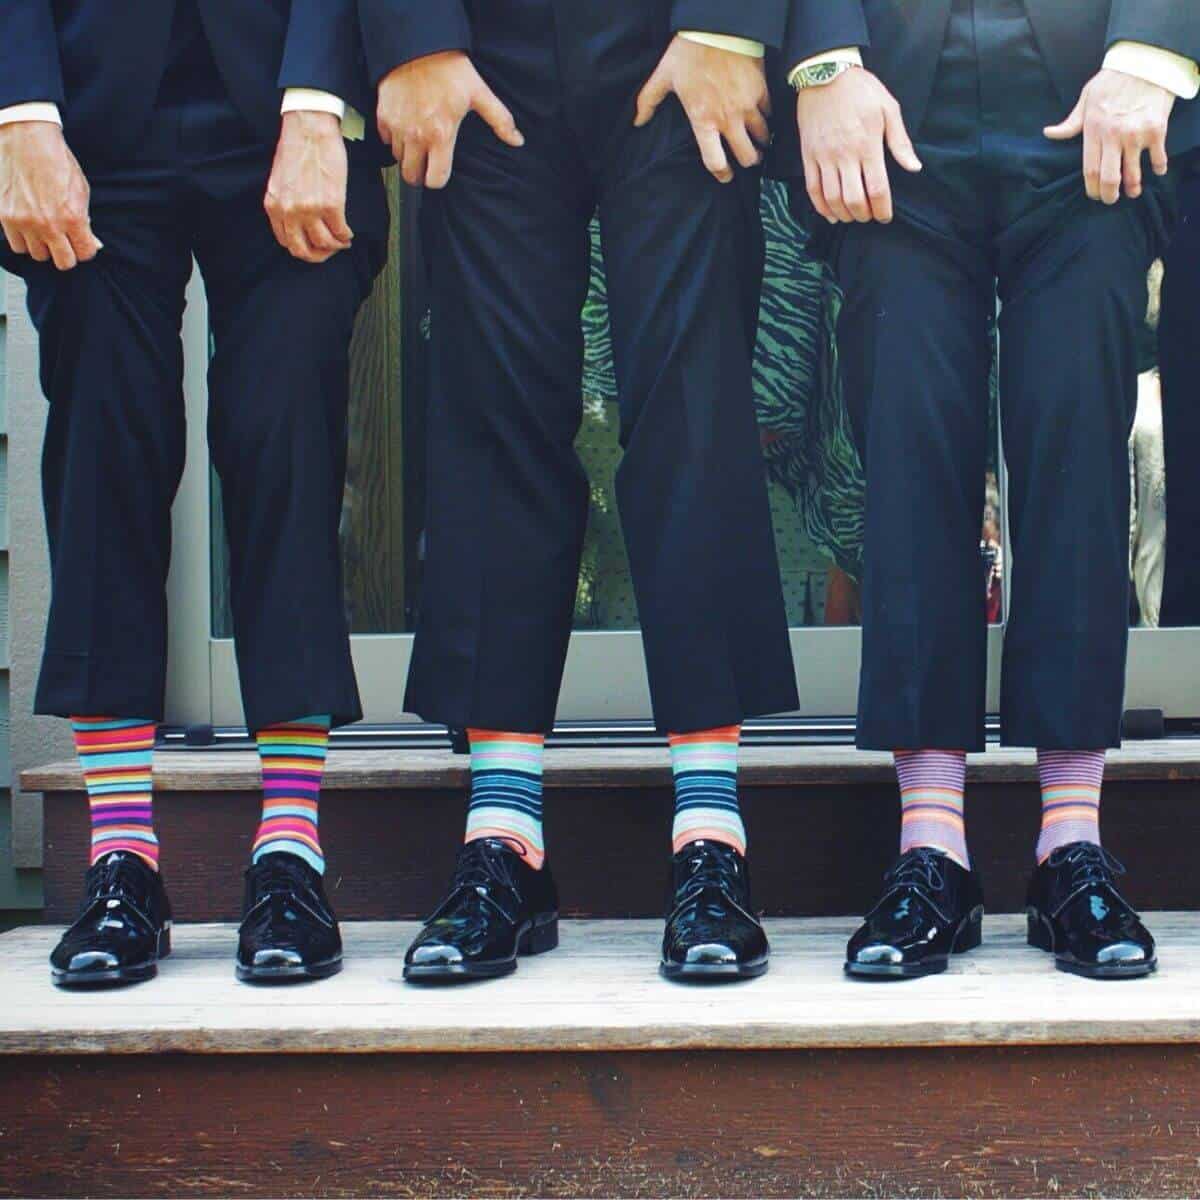 Ultimate men's socks guide - Next Level Gents